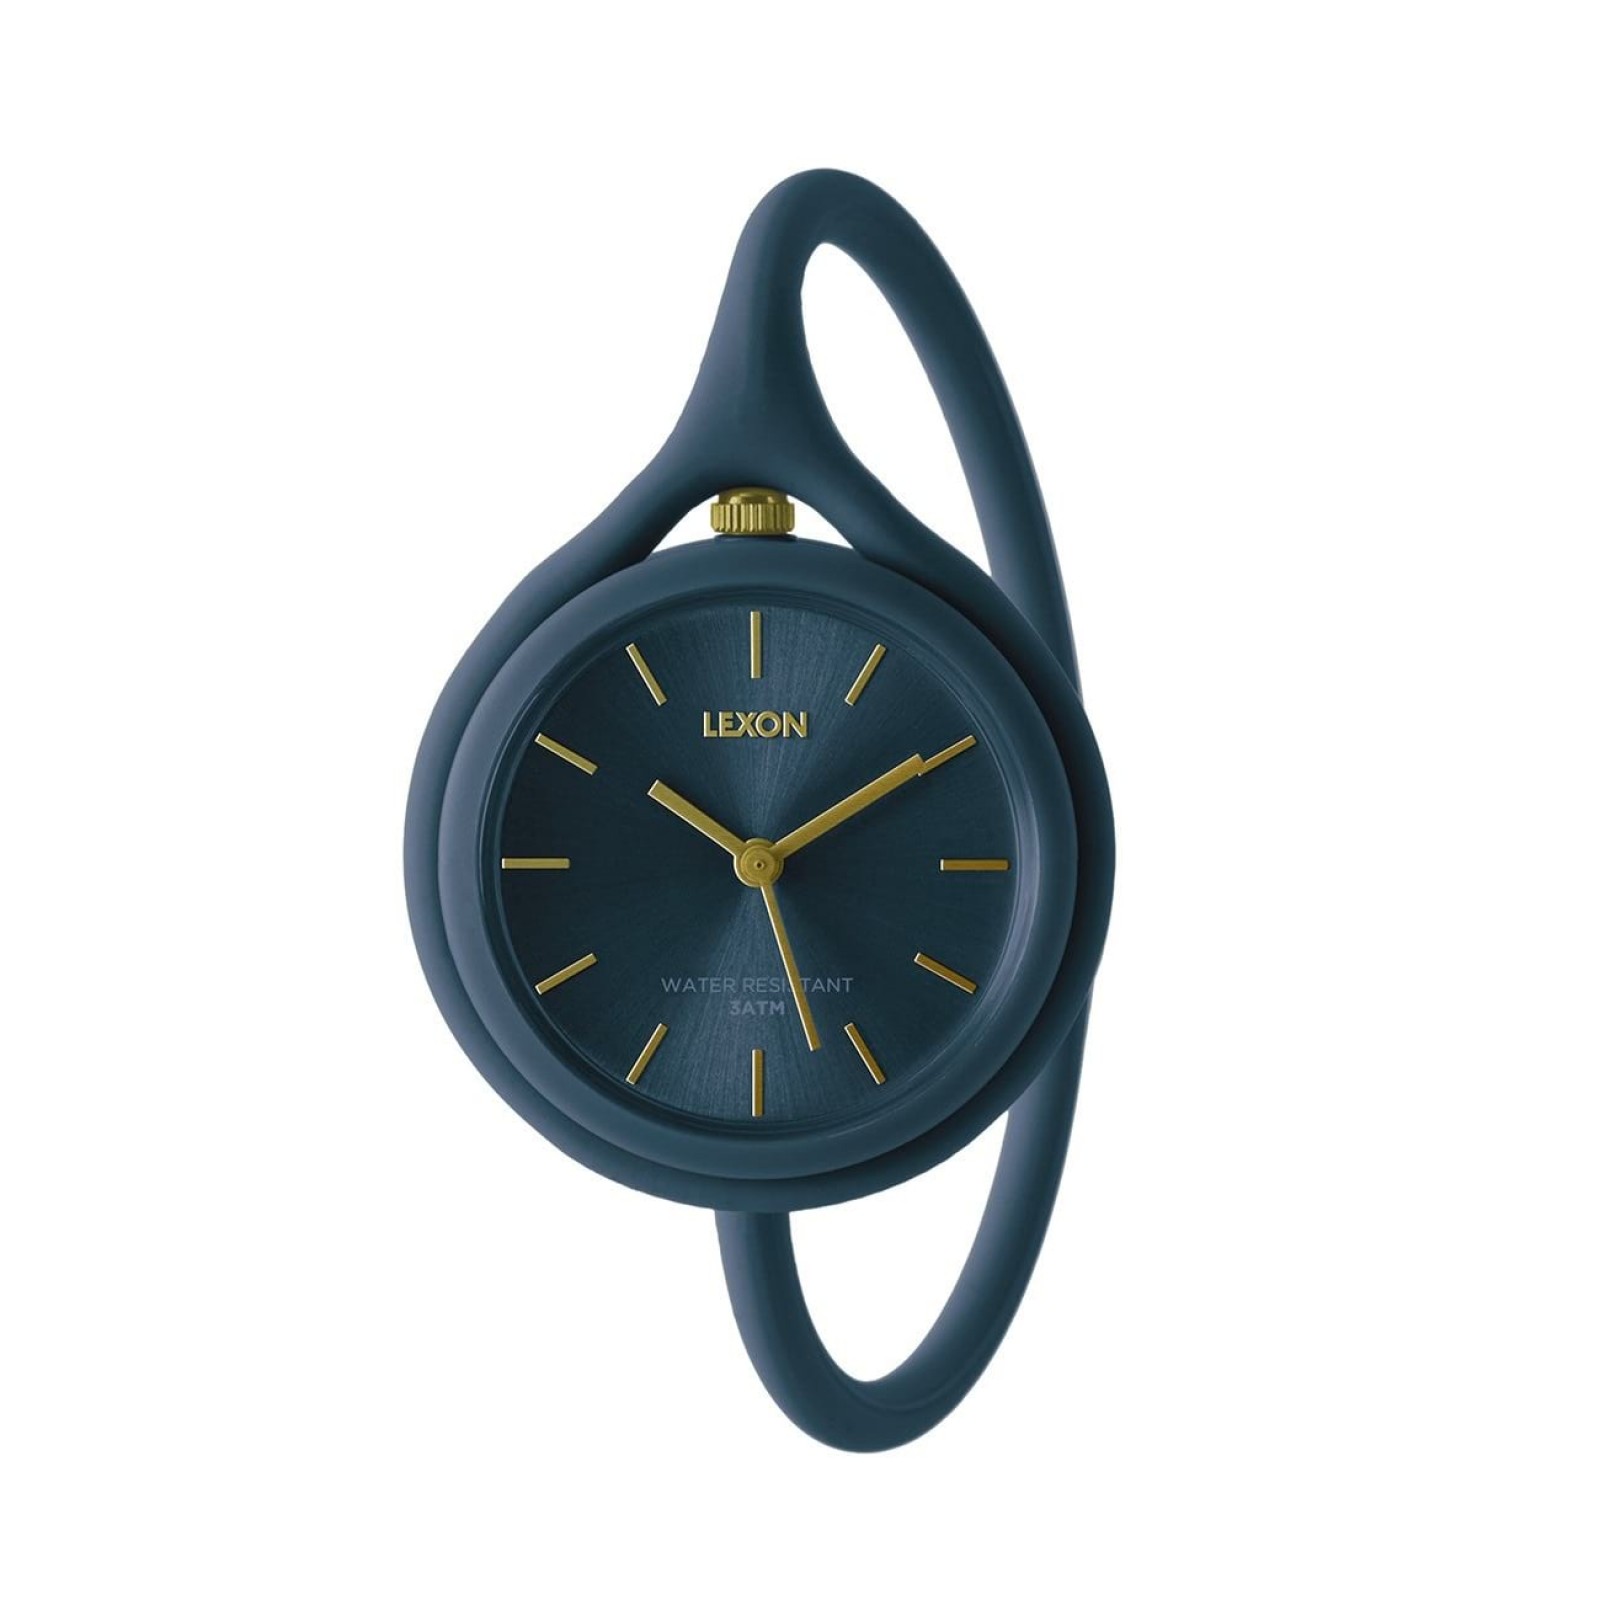 Take Time 3 in 1 Wrist Watch (Dark Blue) - LEXON